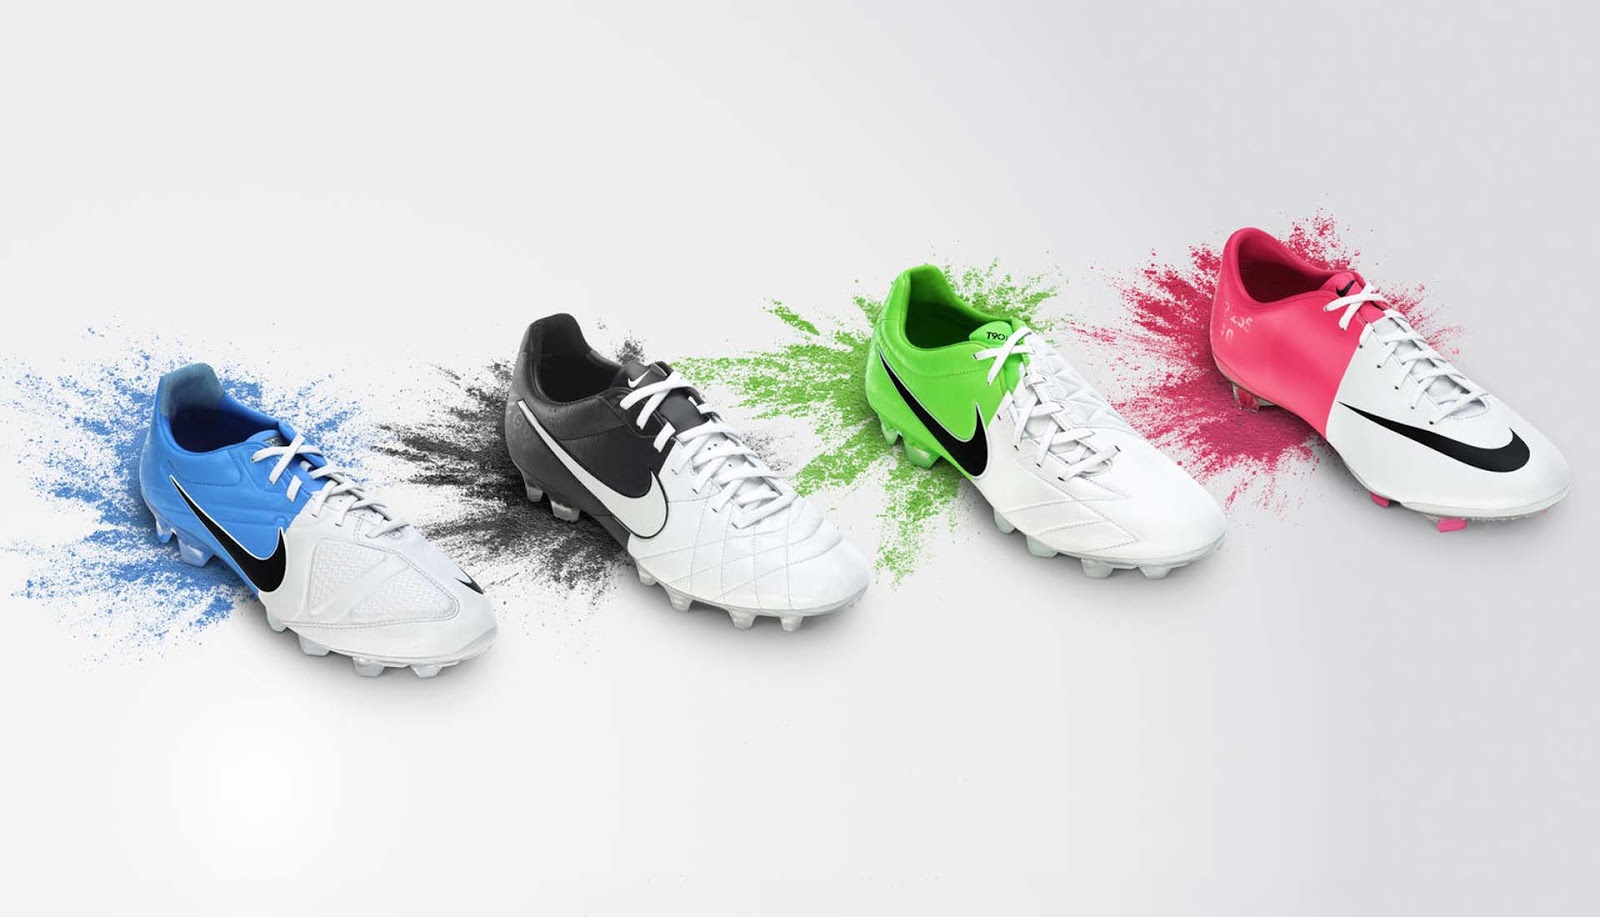 Anticuado Malawi poco claro Classy White / Black Euro 2012 Inspired Nike Premier II Boots Released -  Footy Headlines